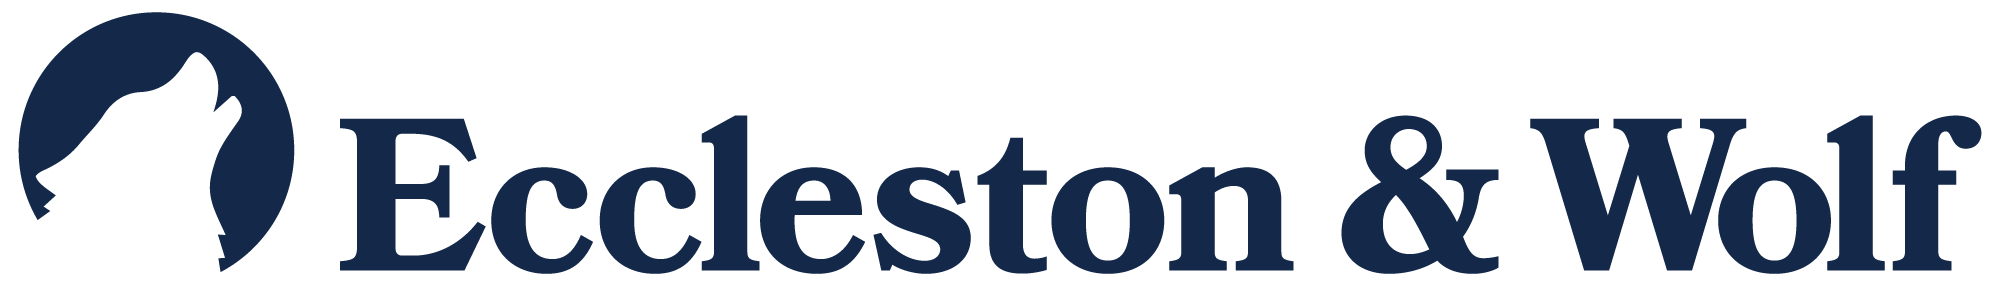 Eccleston and Wolf logo